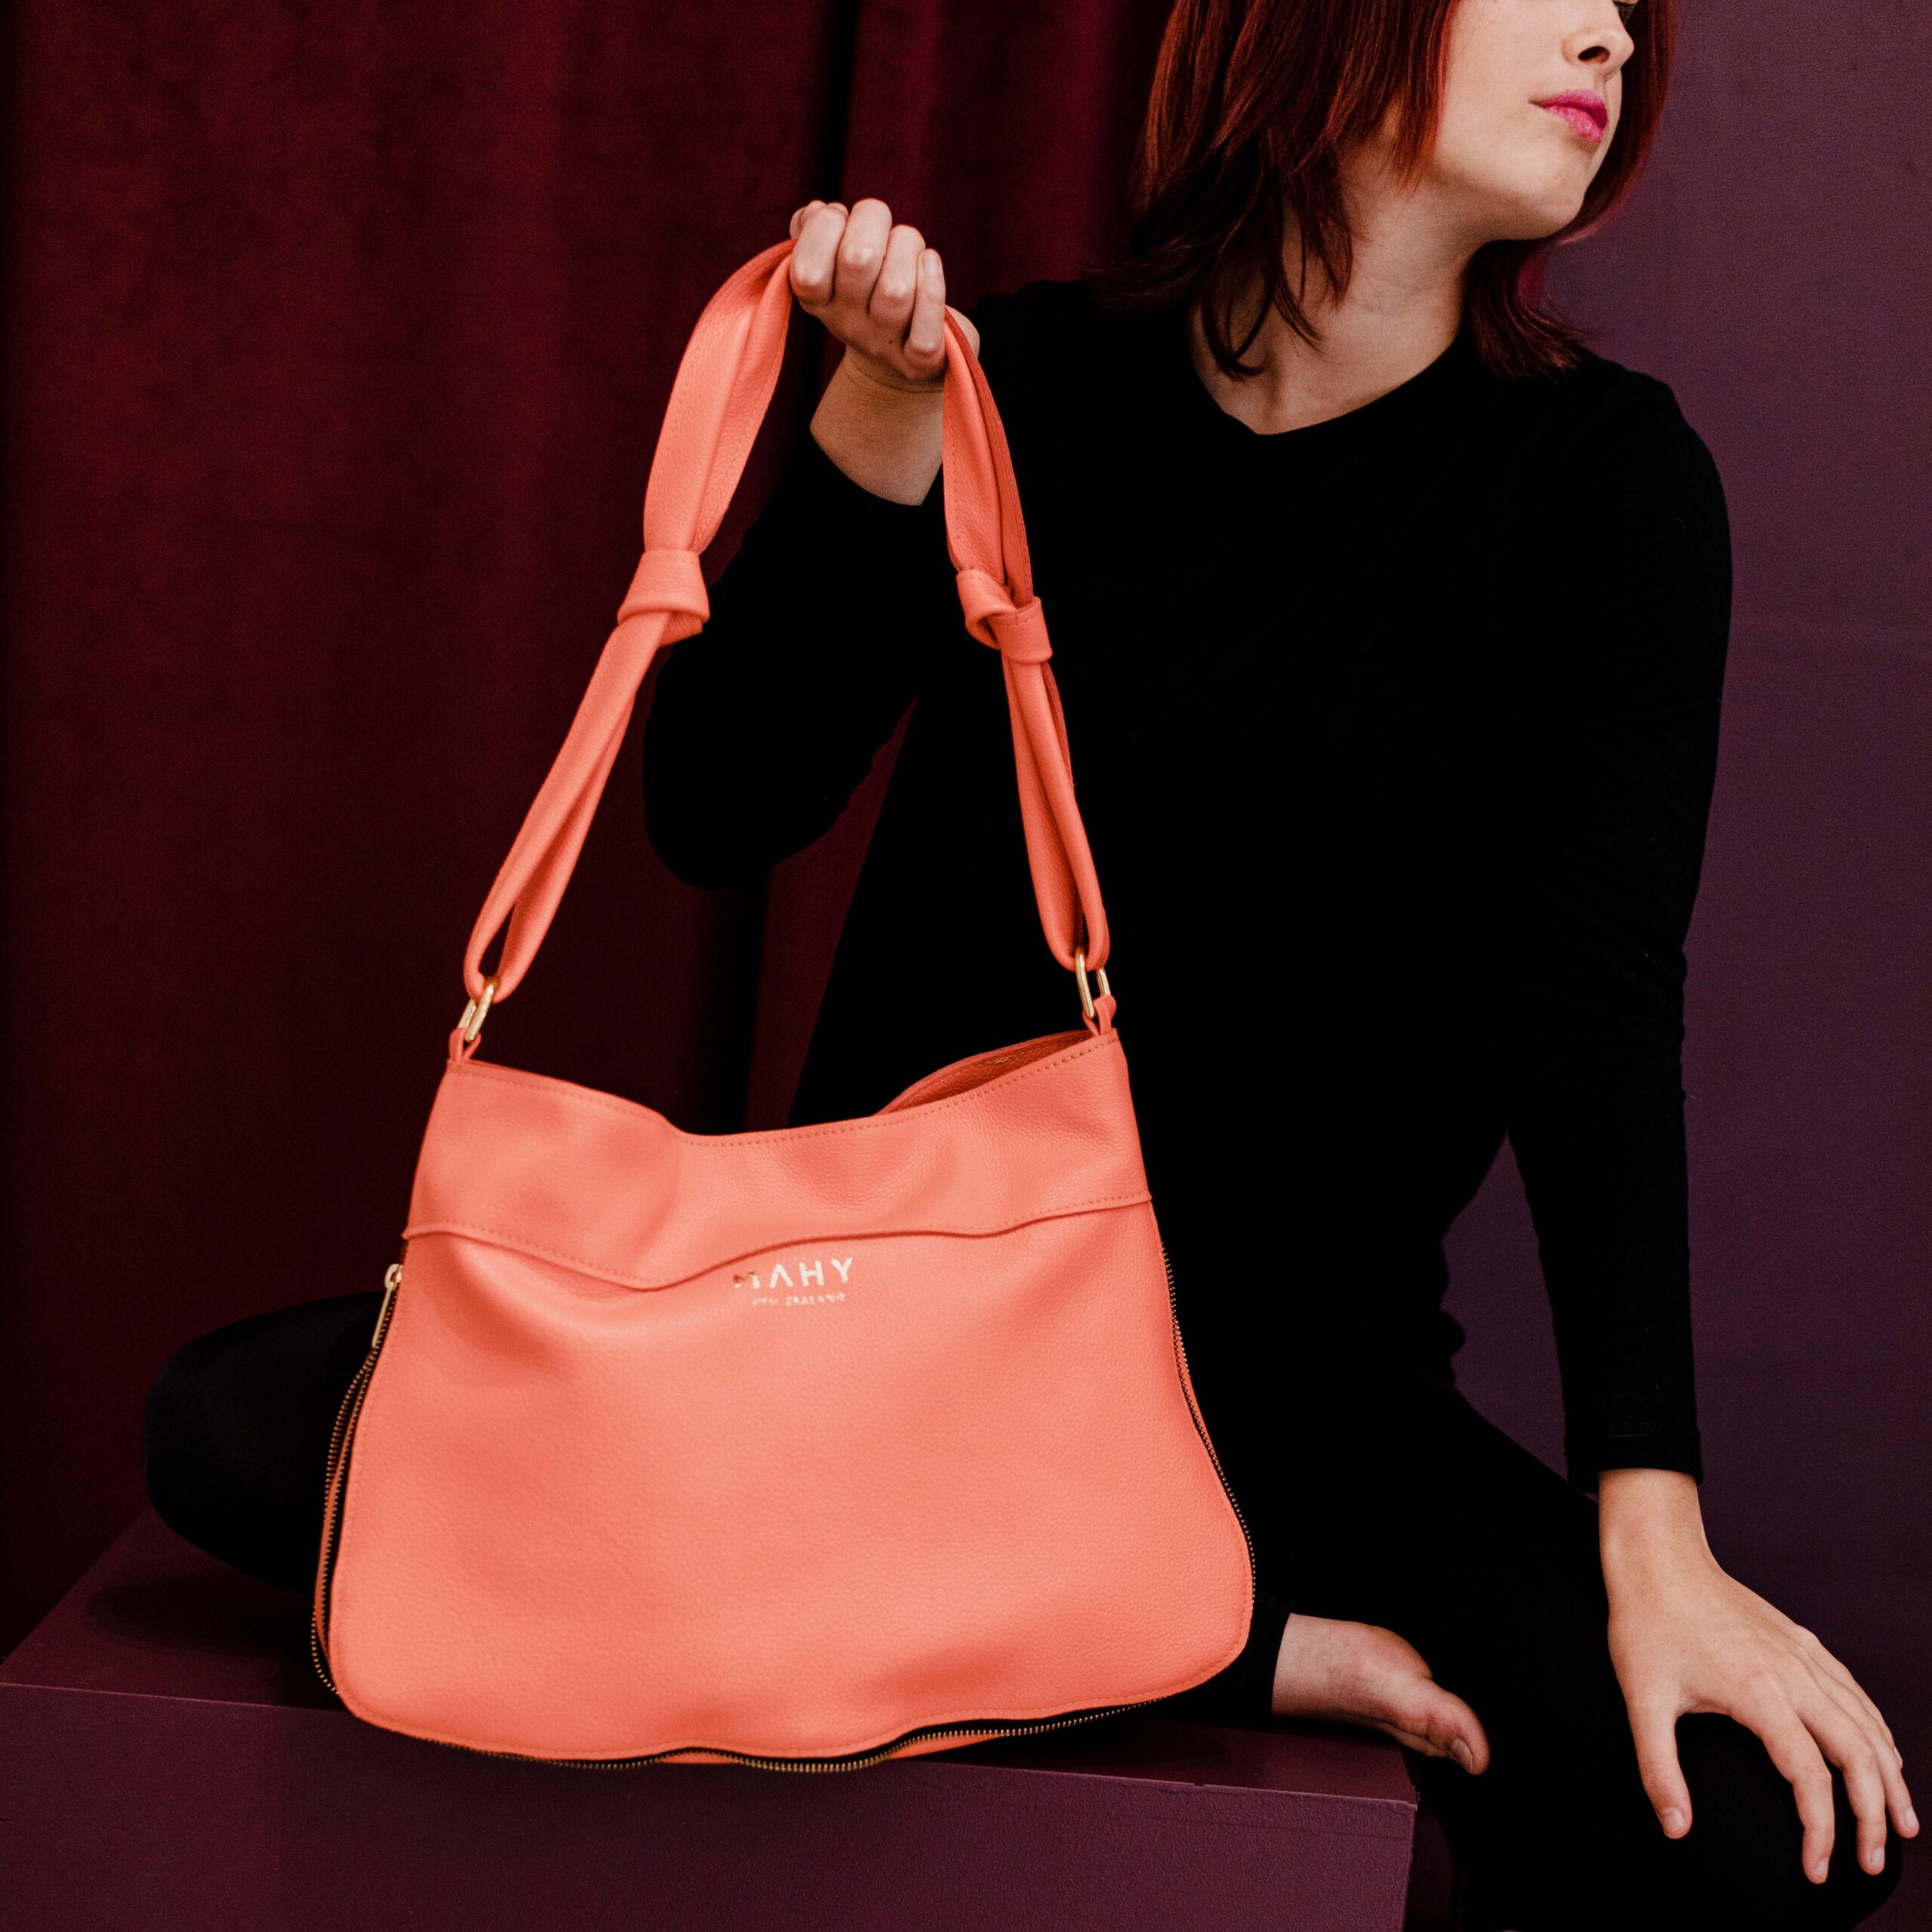 Artisan handbag by MAHY in RAM Colour 370 Living Coral